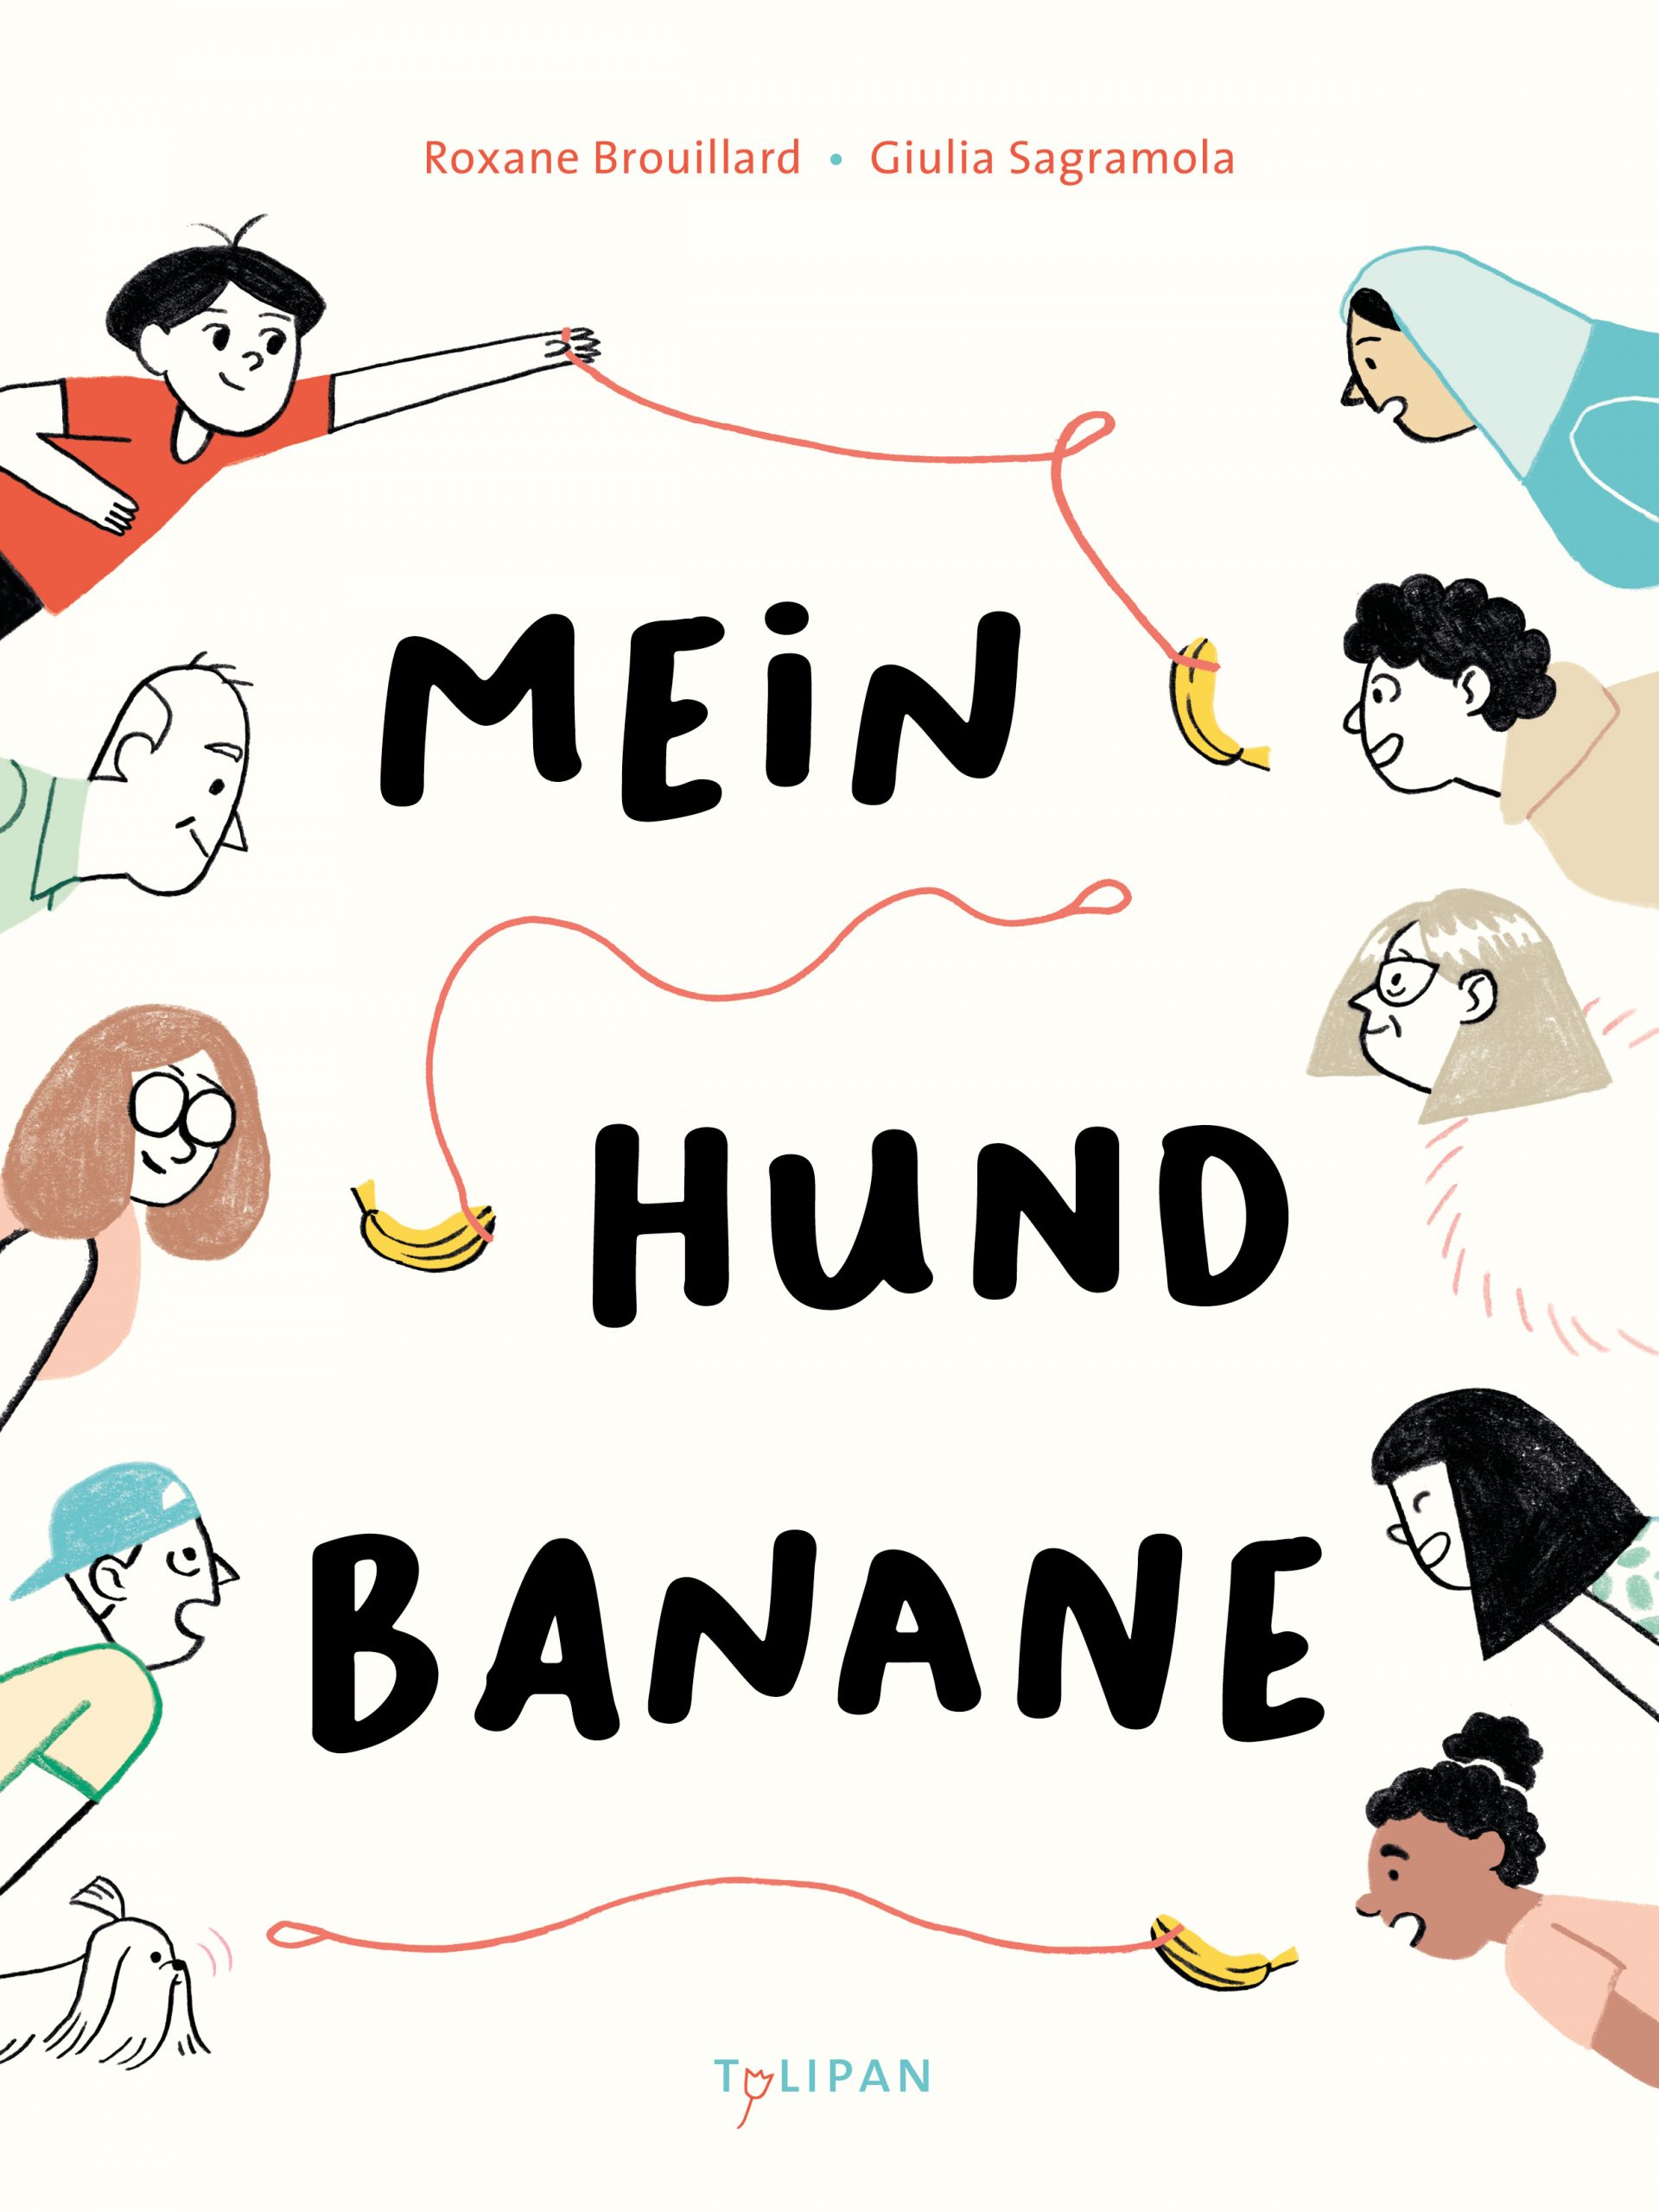 Buchcover "Mein Hund Banane", Tulipan 